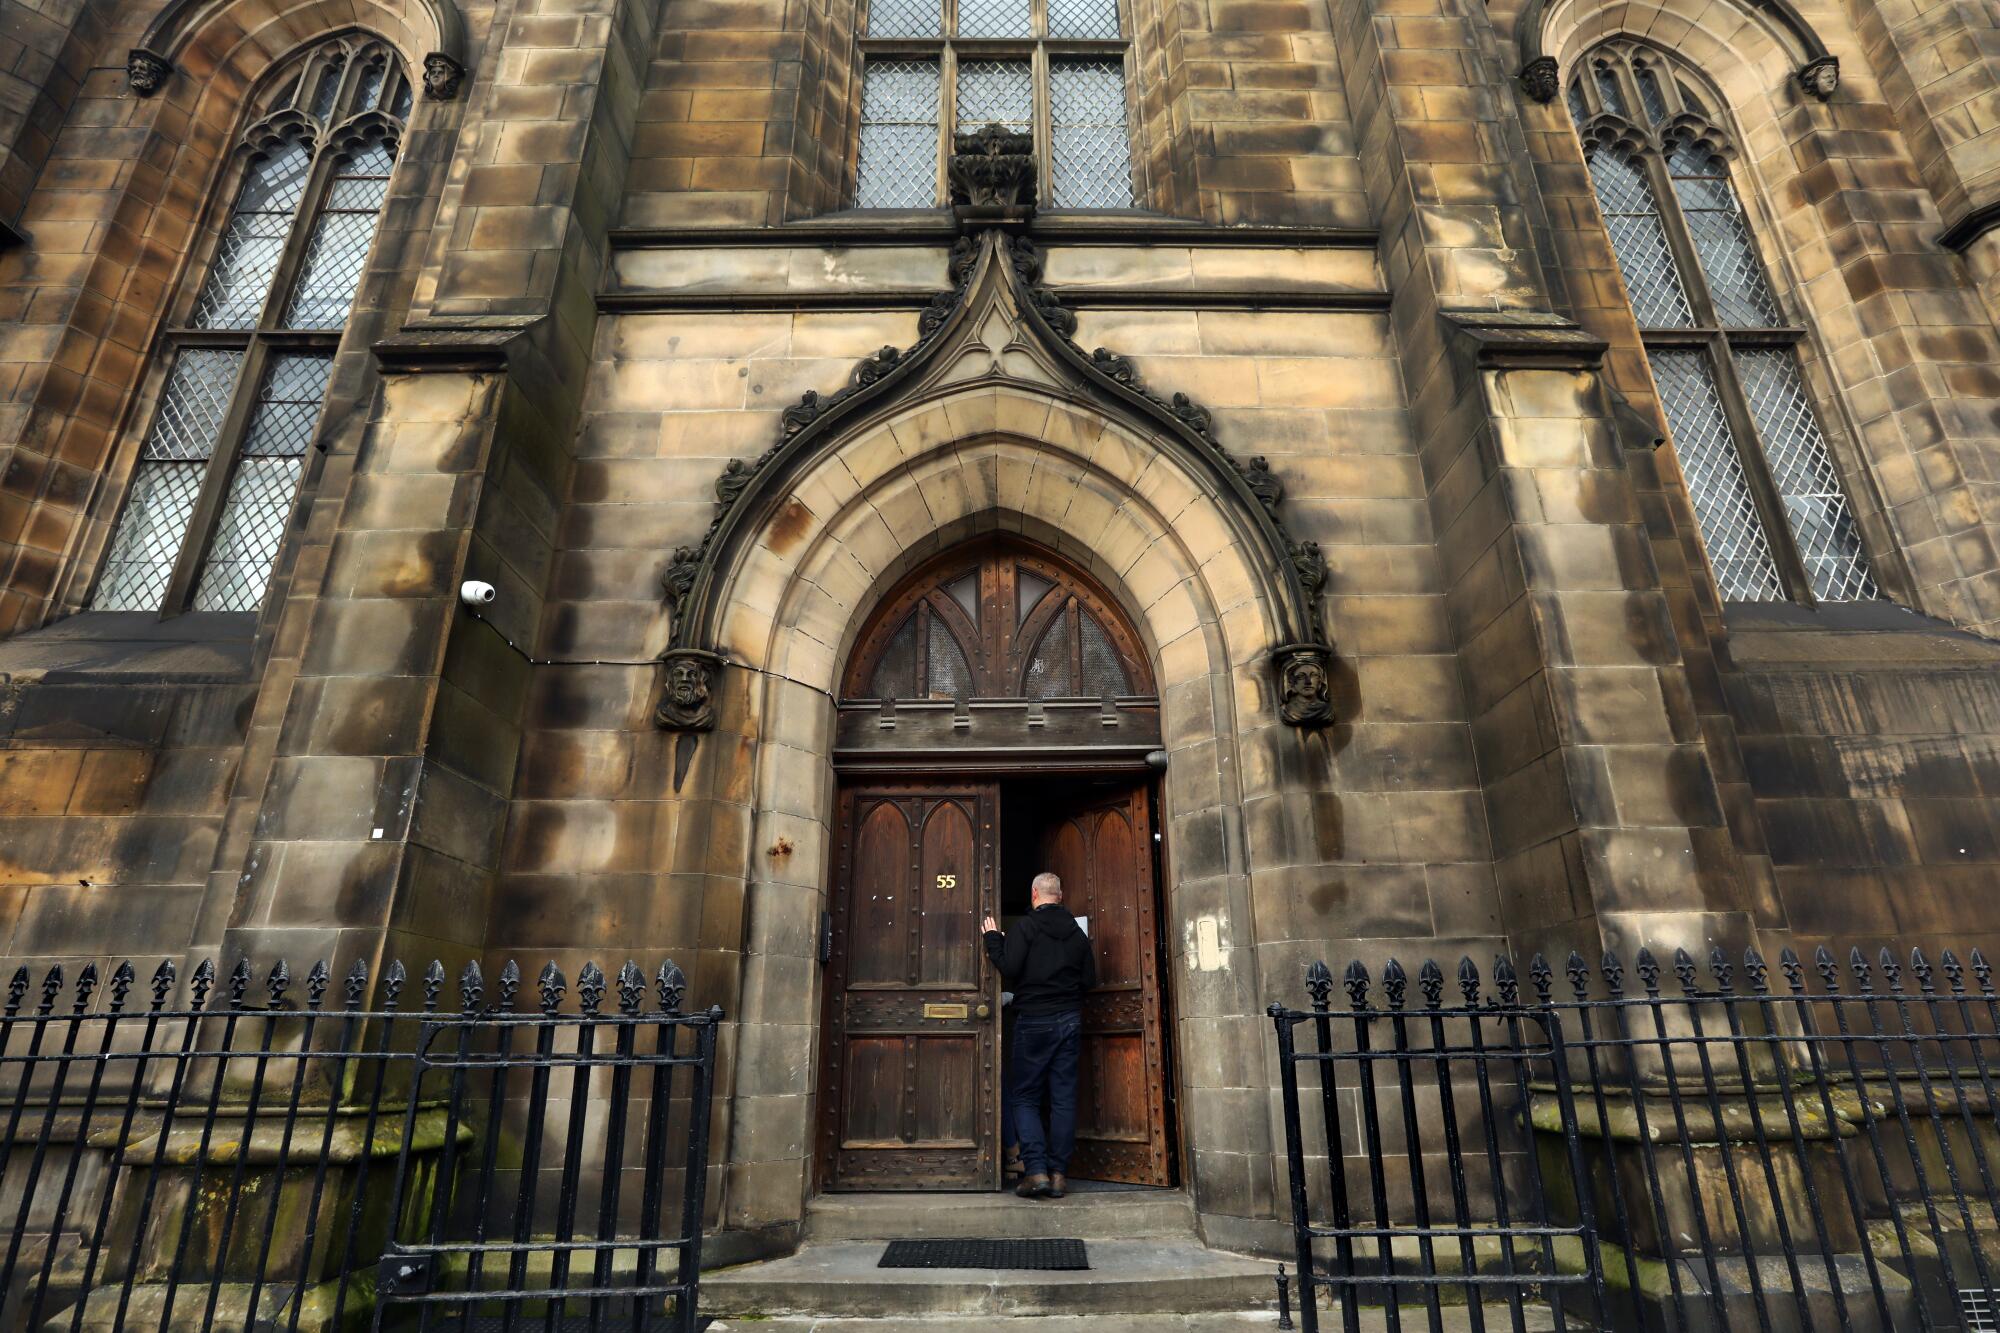 John Dalton at the door of a converted historic church 